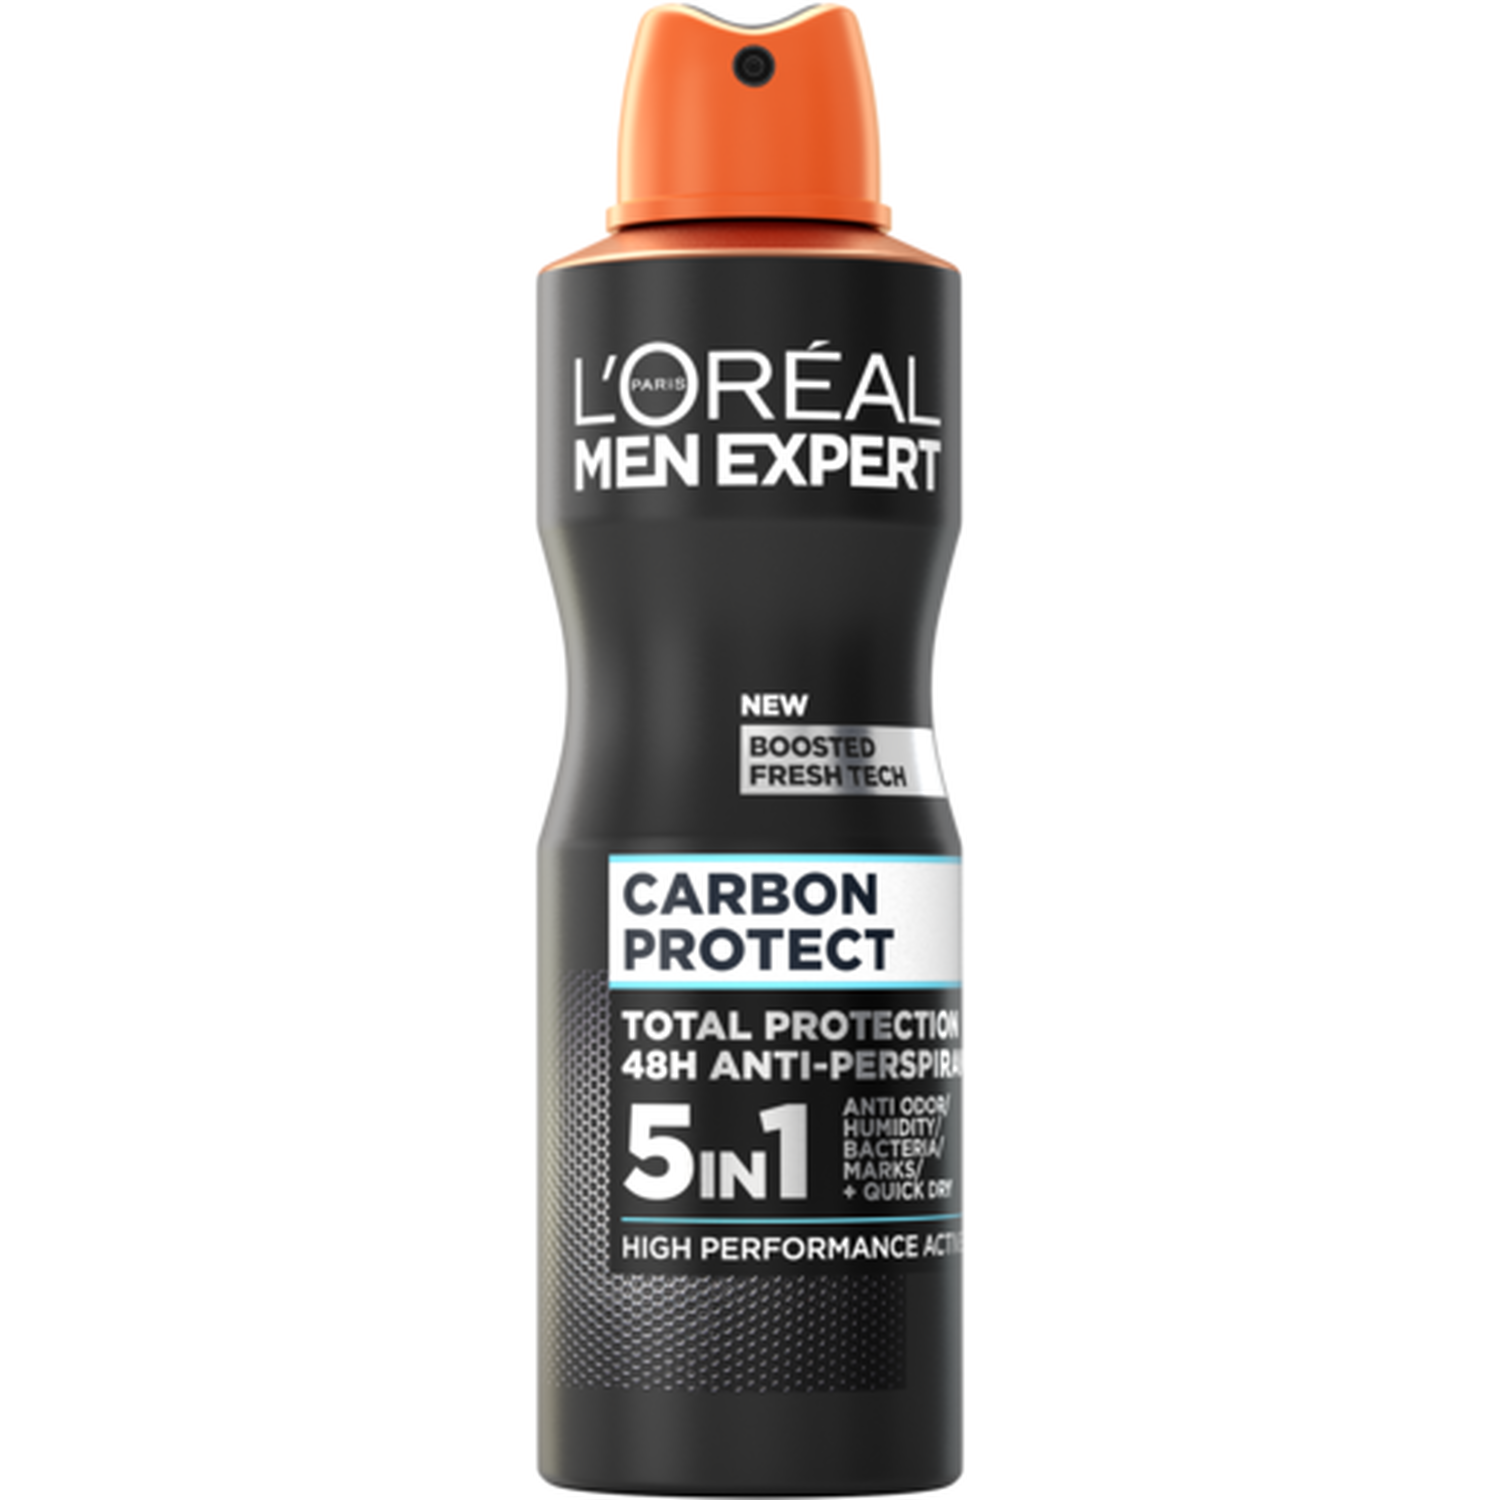 Men Expert Carbon Protect Deodorant 250ml - Black Image 1